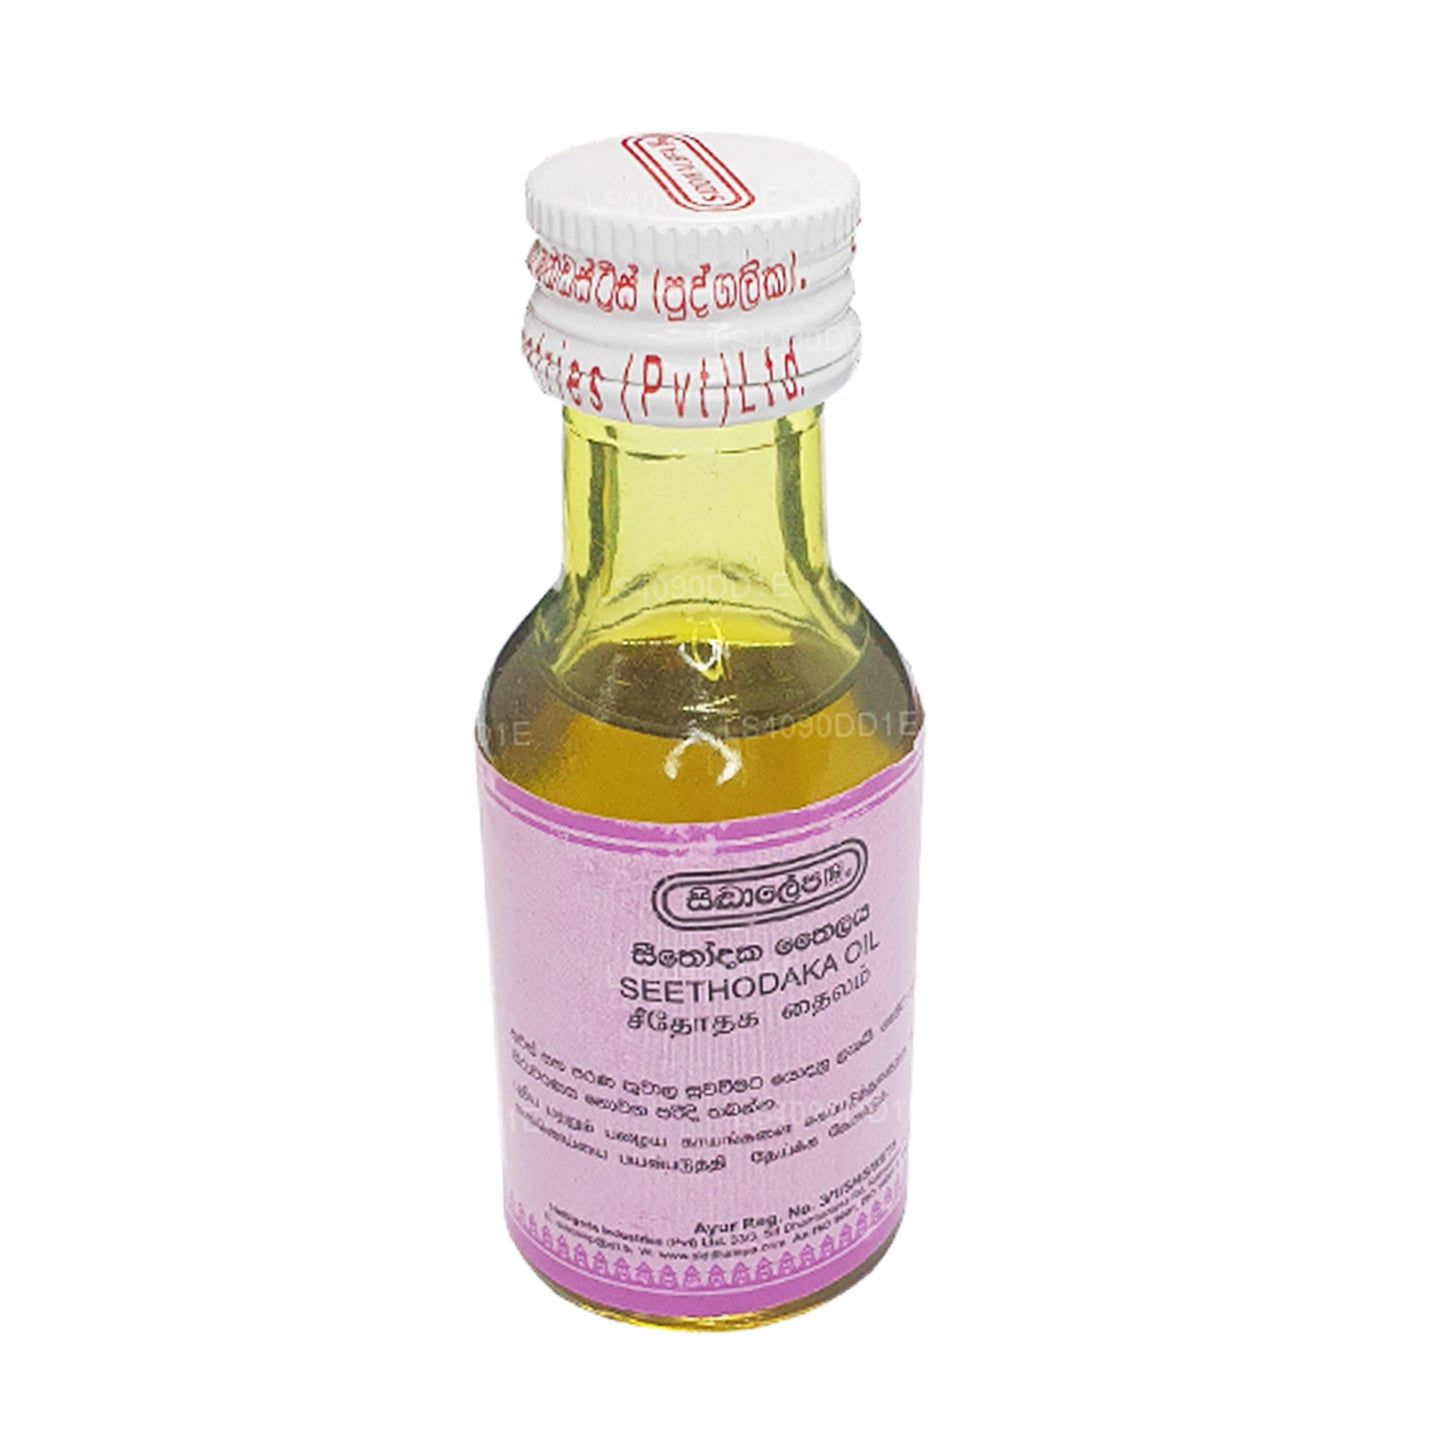 Siddhalepa Seethodaka Oil 30ml